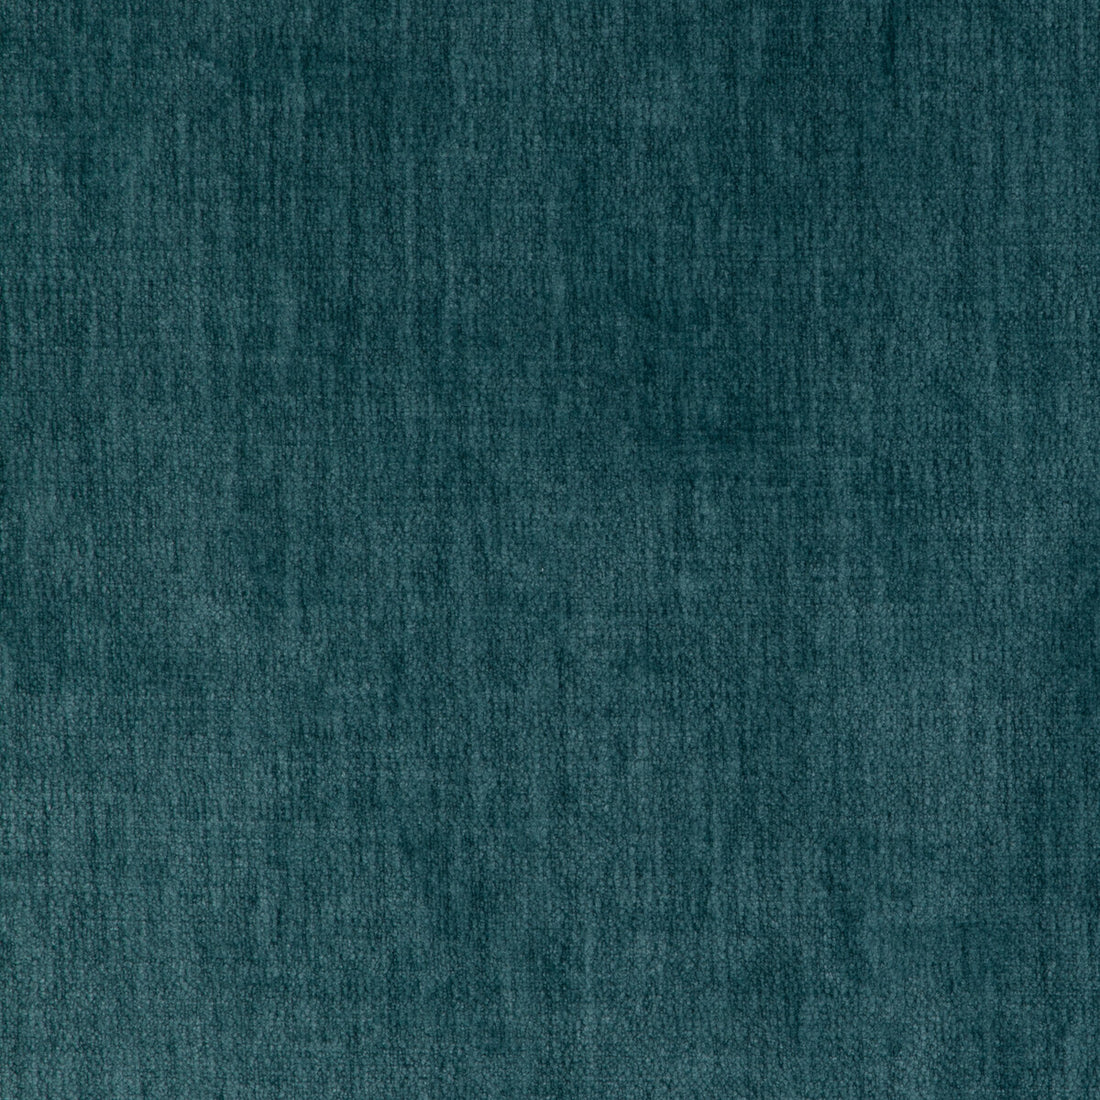 Kravet Smart fabric in 36676-313 color - pattern 36676.313.0 - by Kravet Smart in the Performance Kravetarmor collection